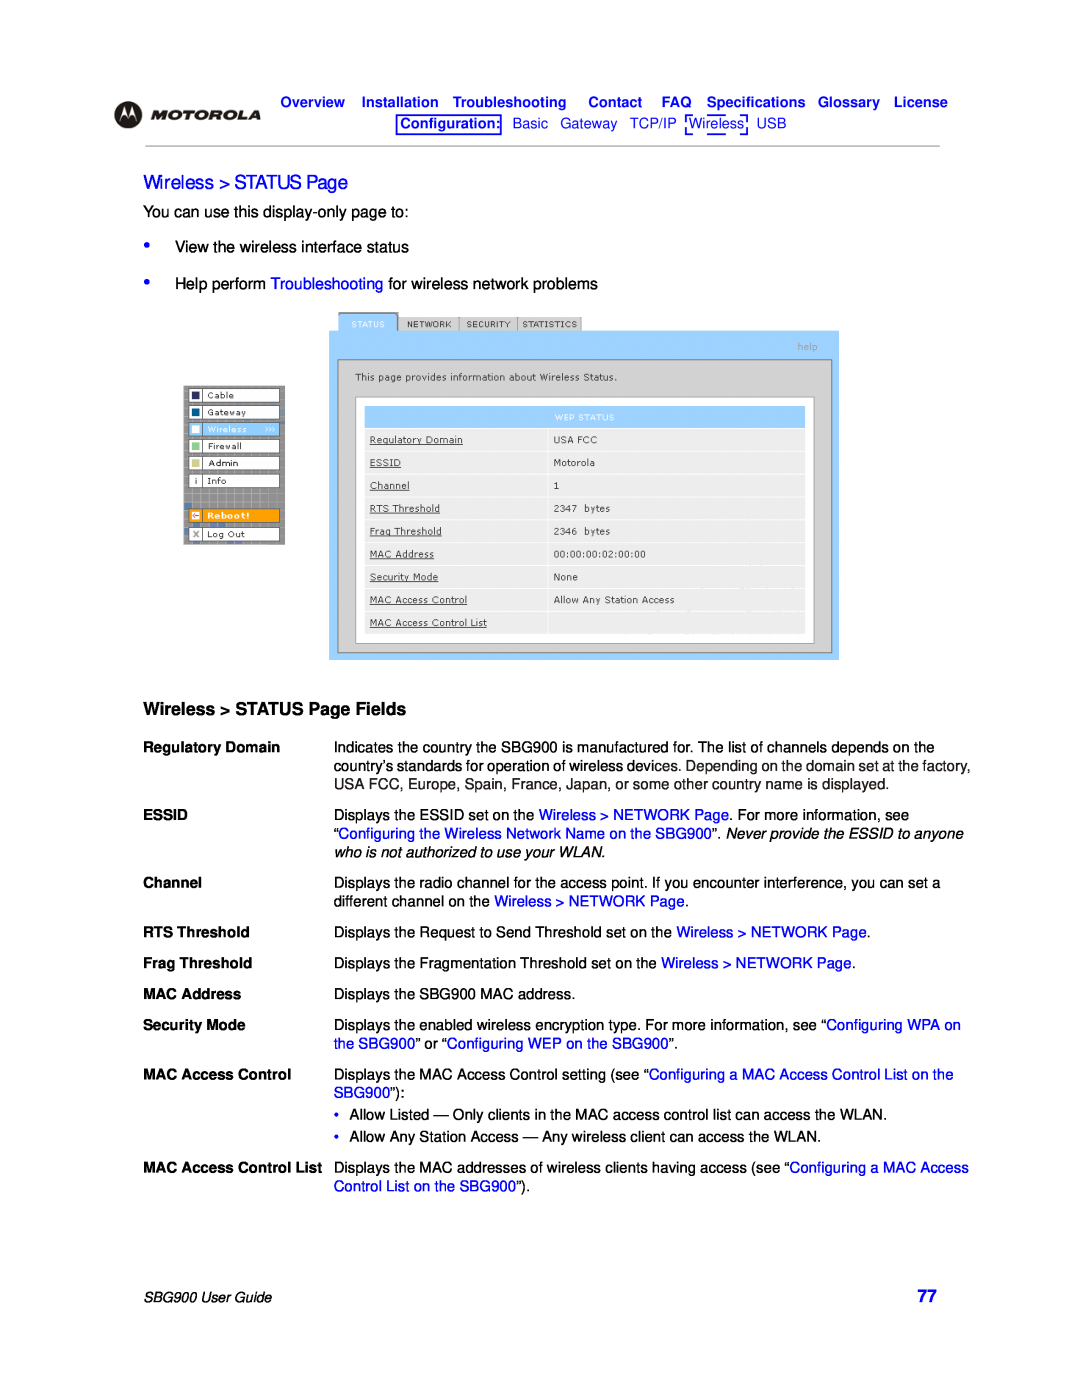 Motorola manual Wireless STATUS Page Fields, Configuration Basic Gateway TCP/IP Wireless USB, SBG900 User Guide 